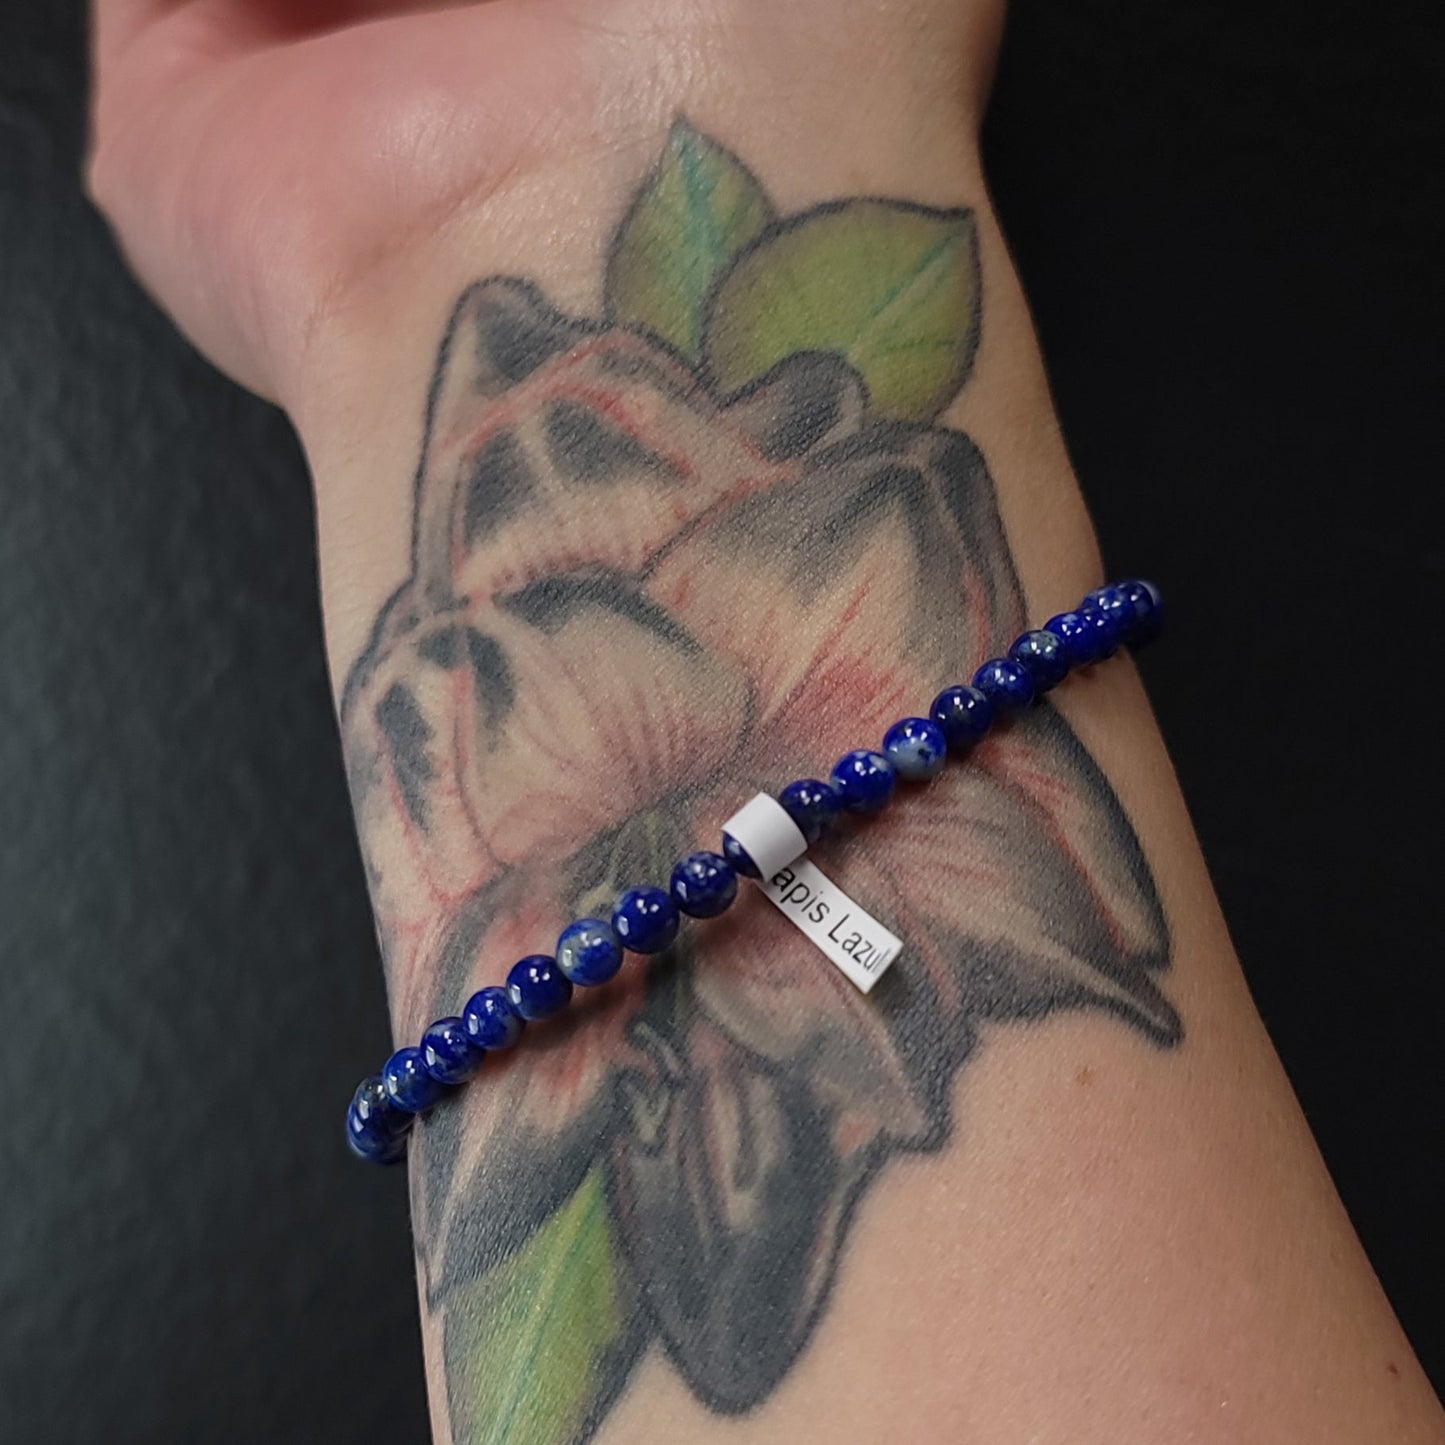 Lapis Lazuli Bead Bracelet 4mm